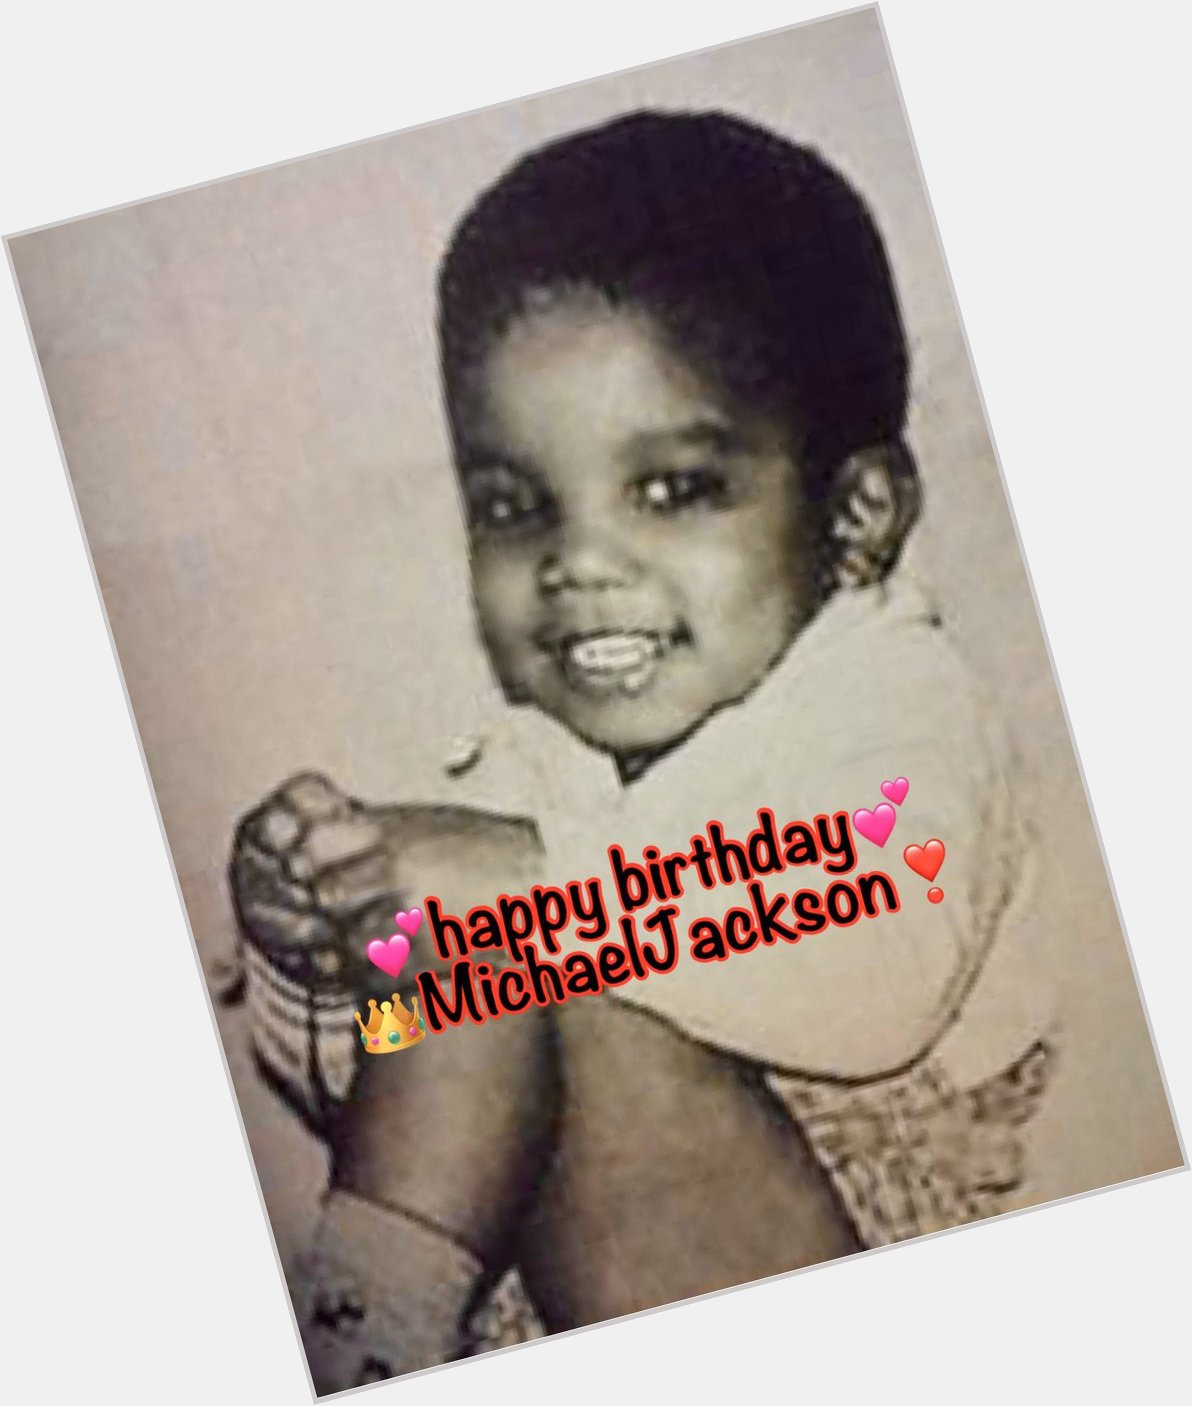 Happy birthday Michael Jackson   # MichaelJackson 